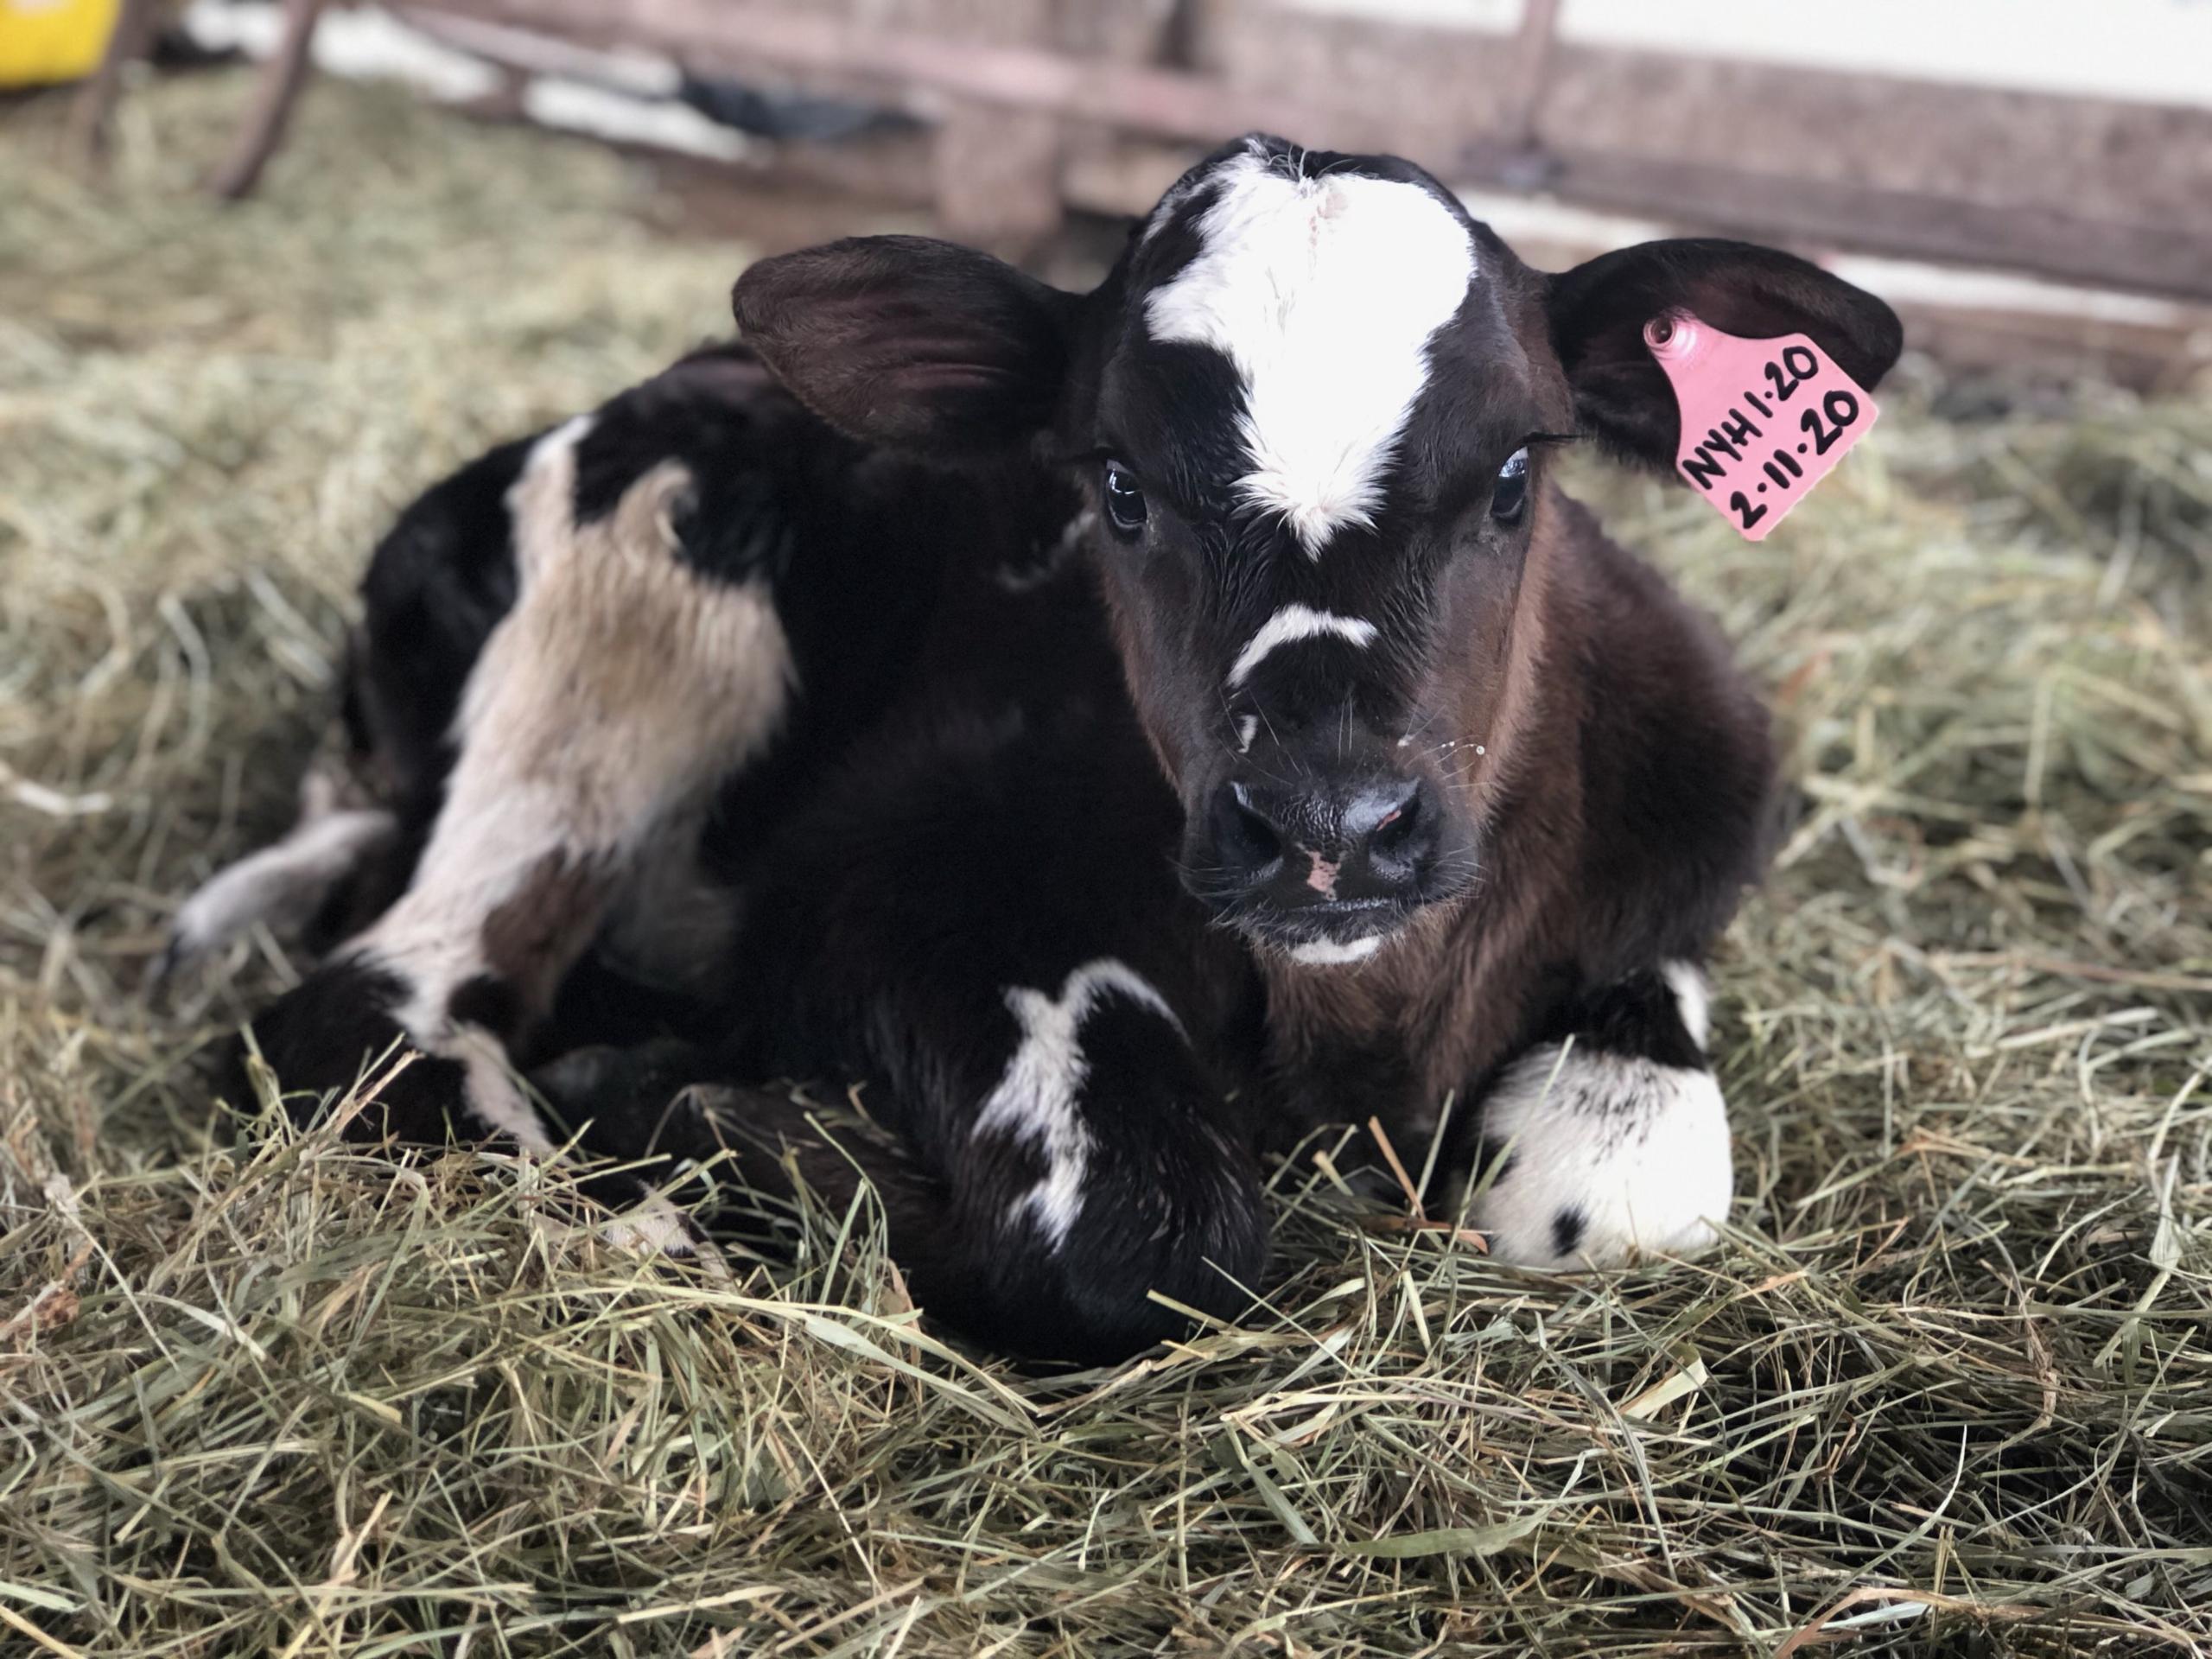 First calf born in 2020 for Simply Grazin'